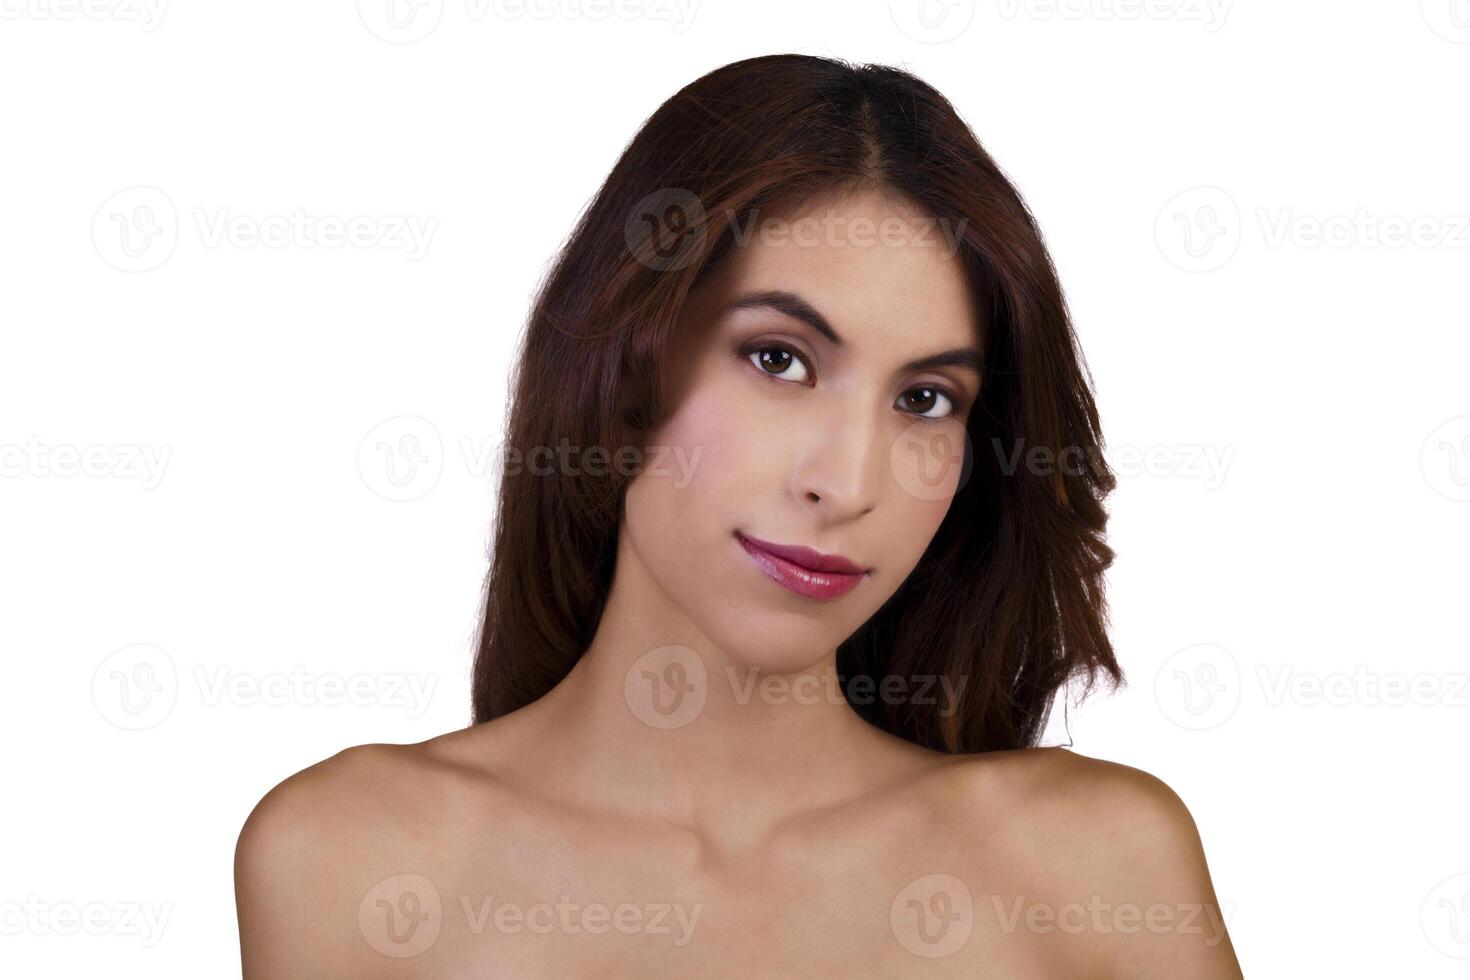 flaco desnudo hombro retrato atractivo Hispano mujer foto